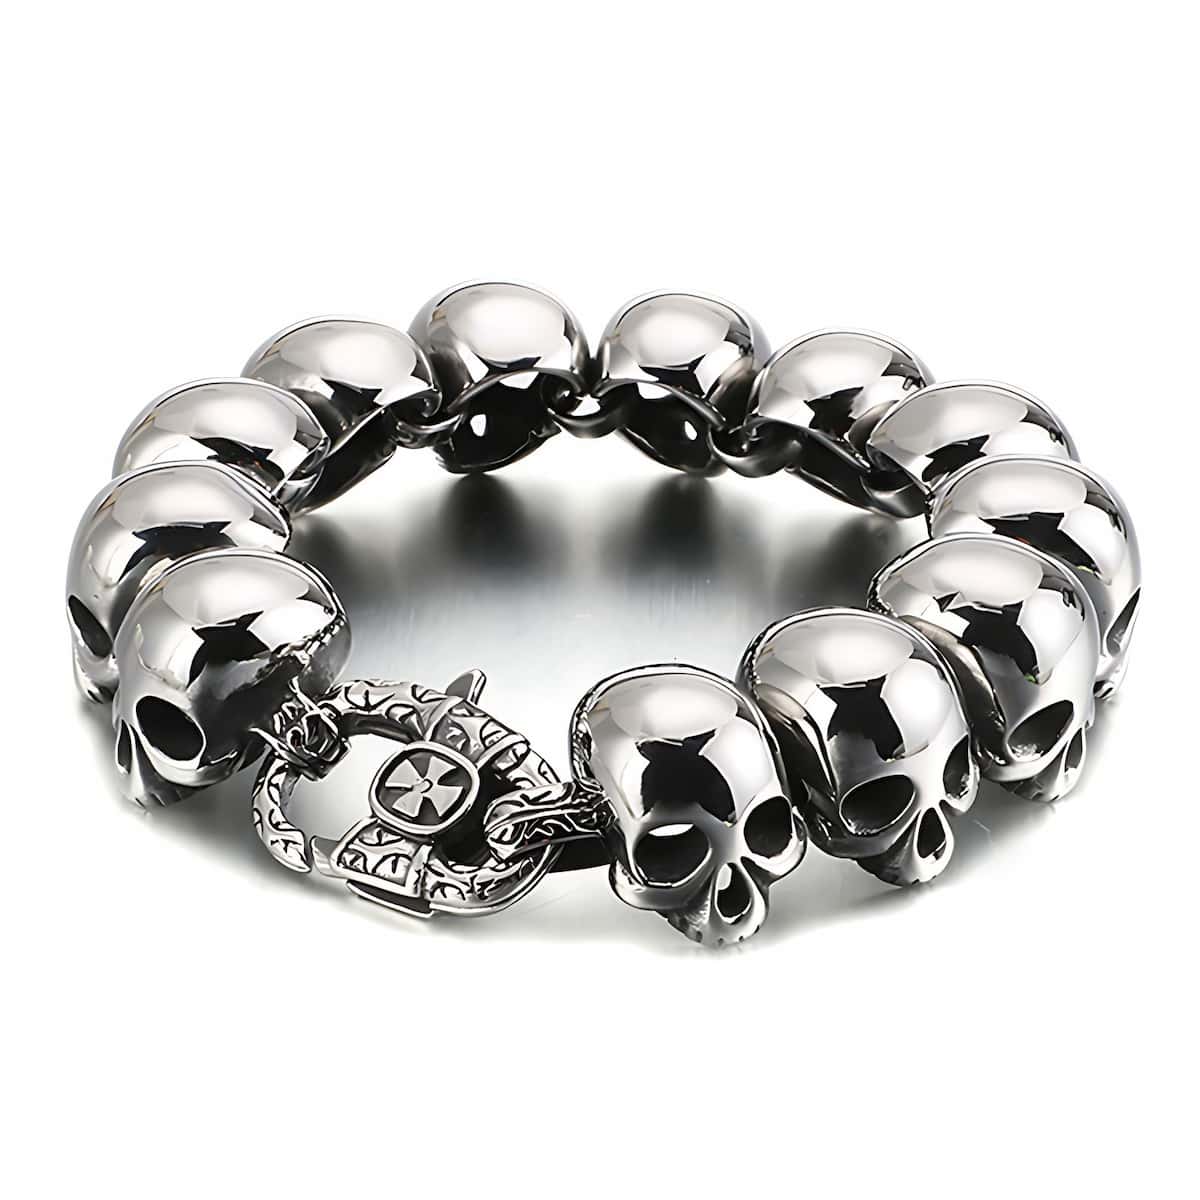 Skull and Crossbones Bracelet Silver Xenos Jewelry